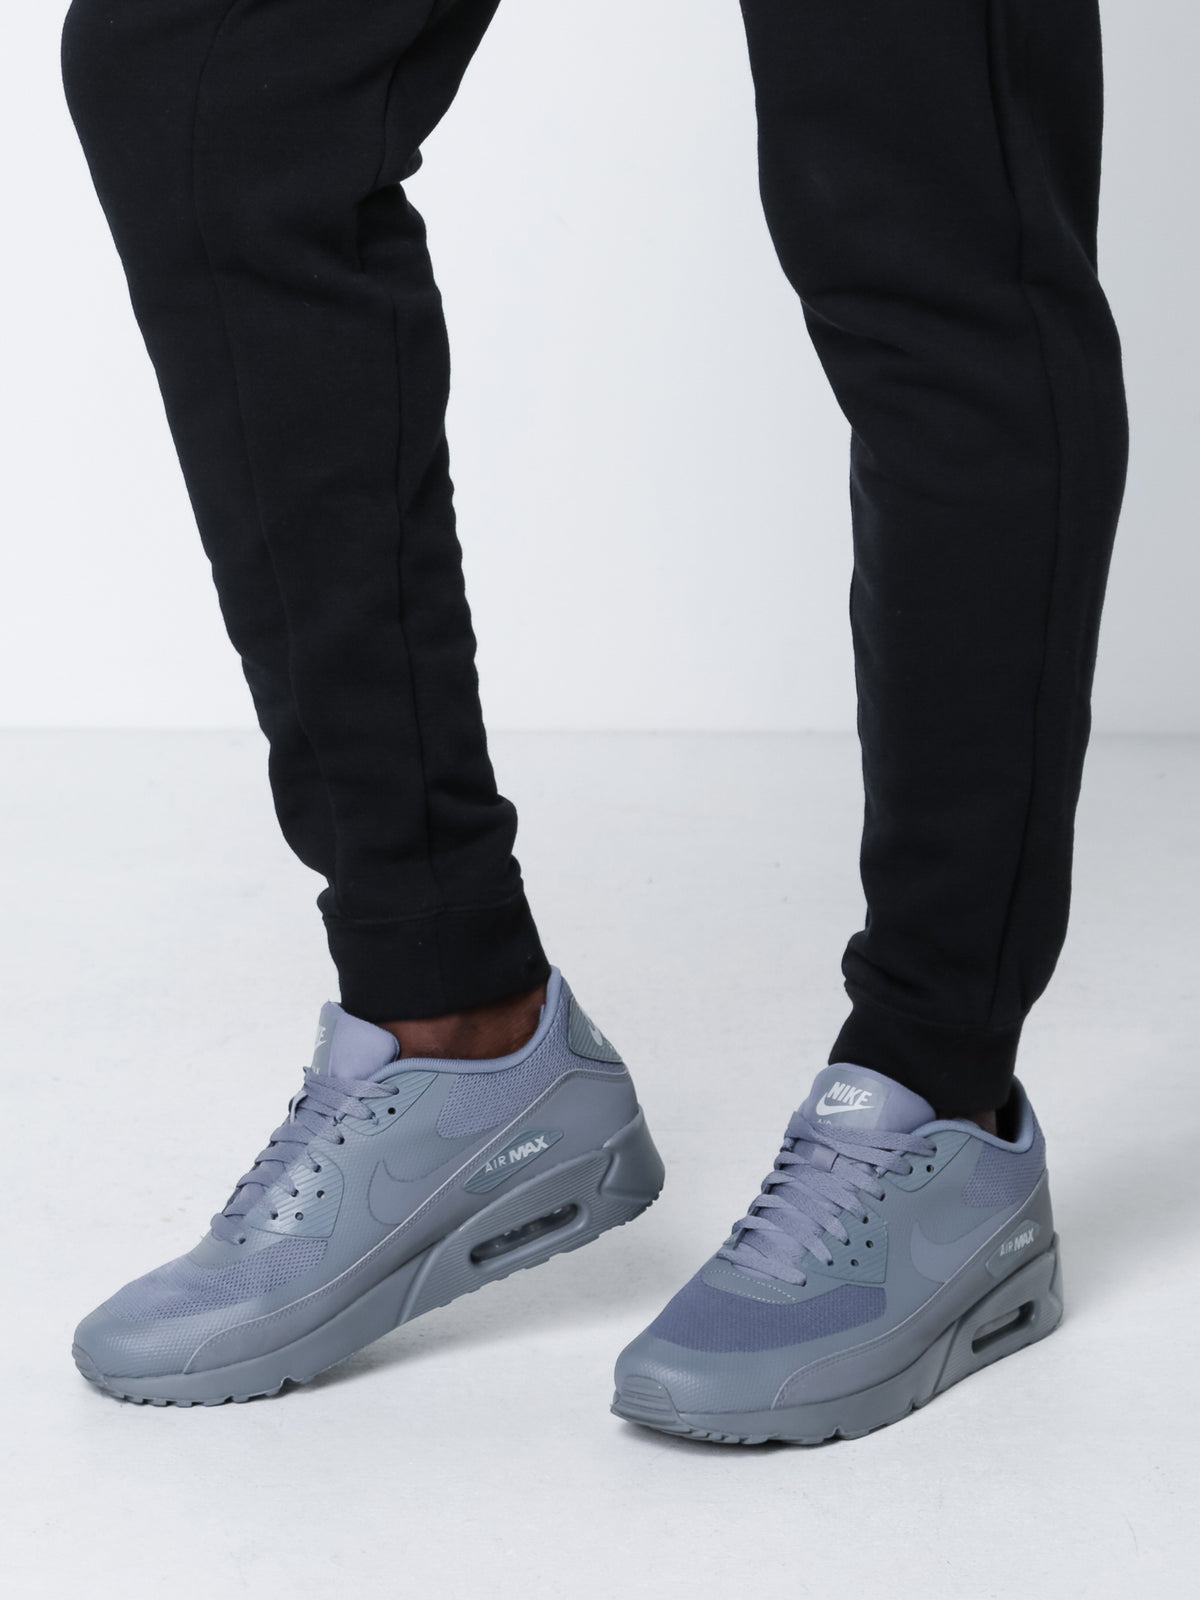 Mens Air Max 90 Ultra 2.0 Essential Sneakers in Grey